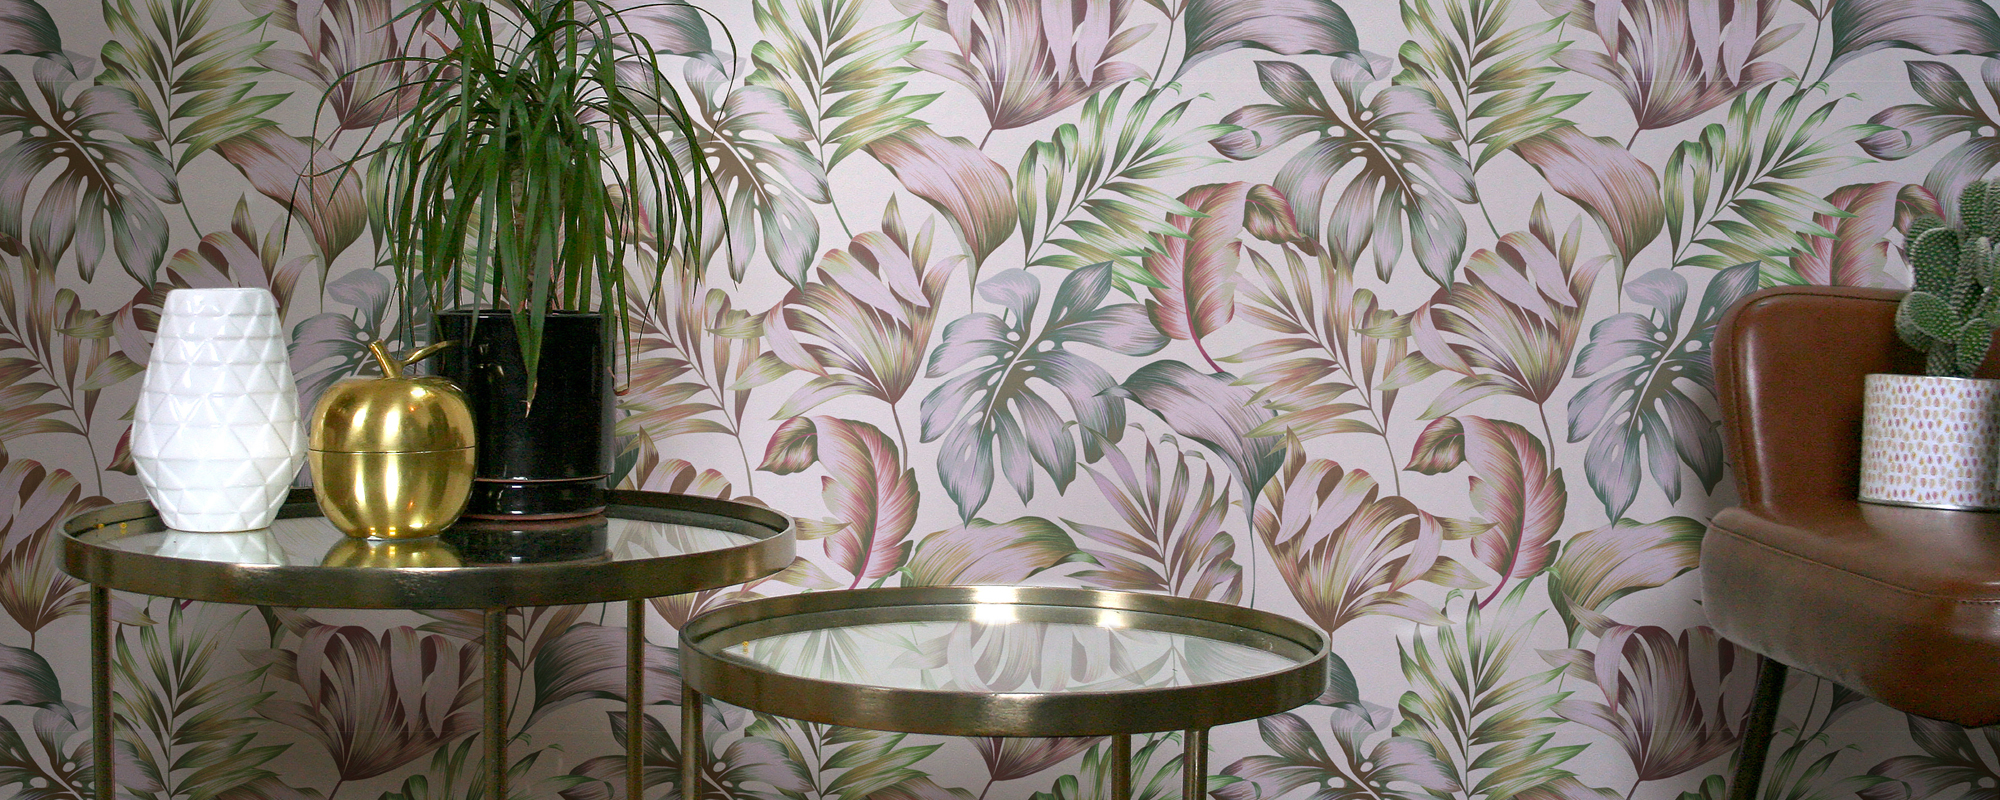 Tropical design wallpaper light background